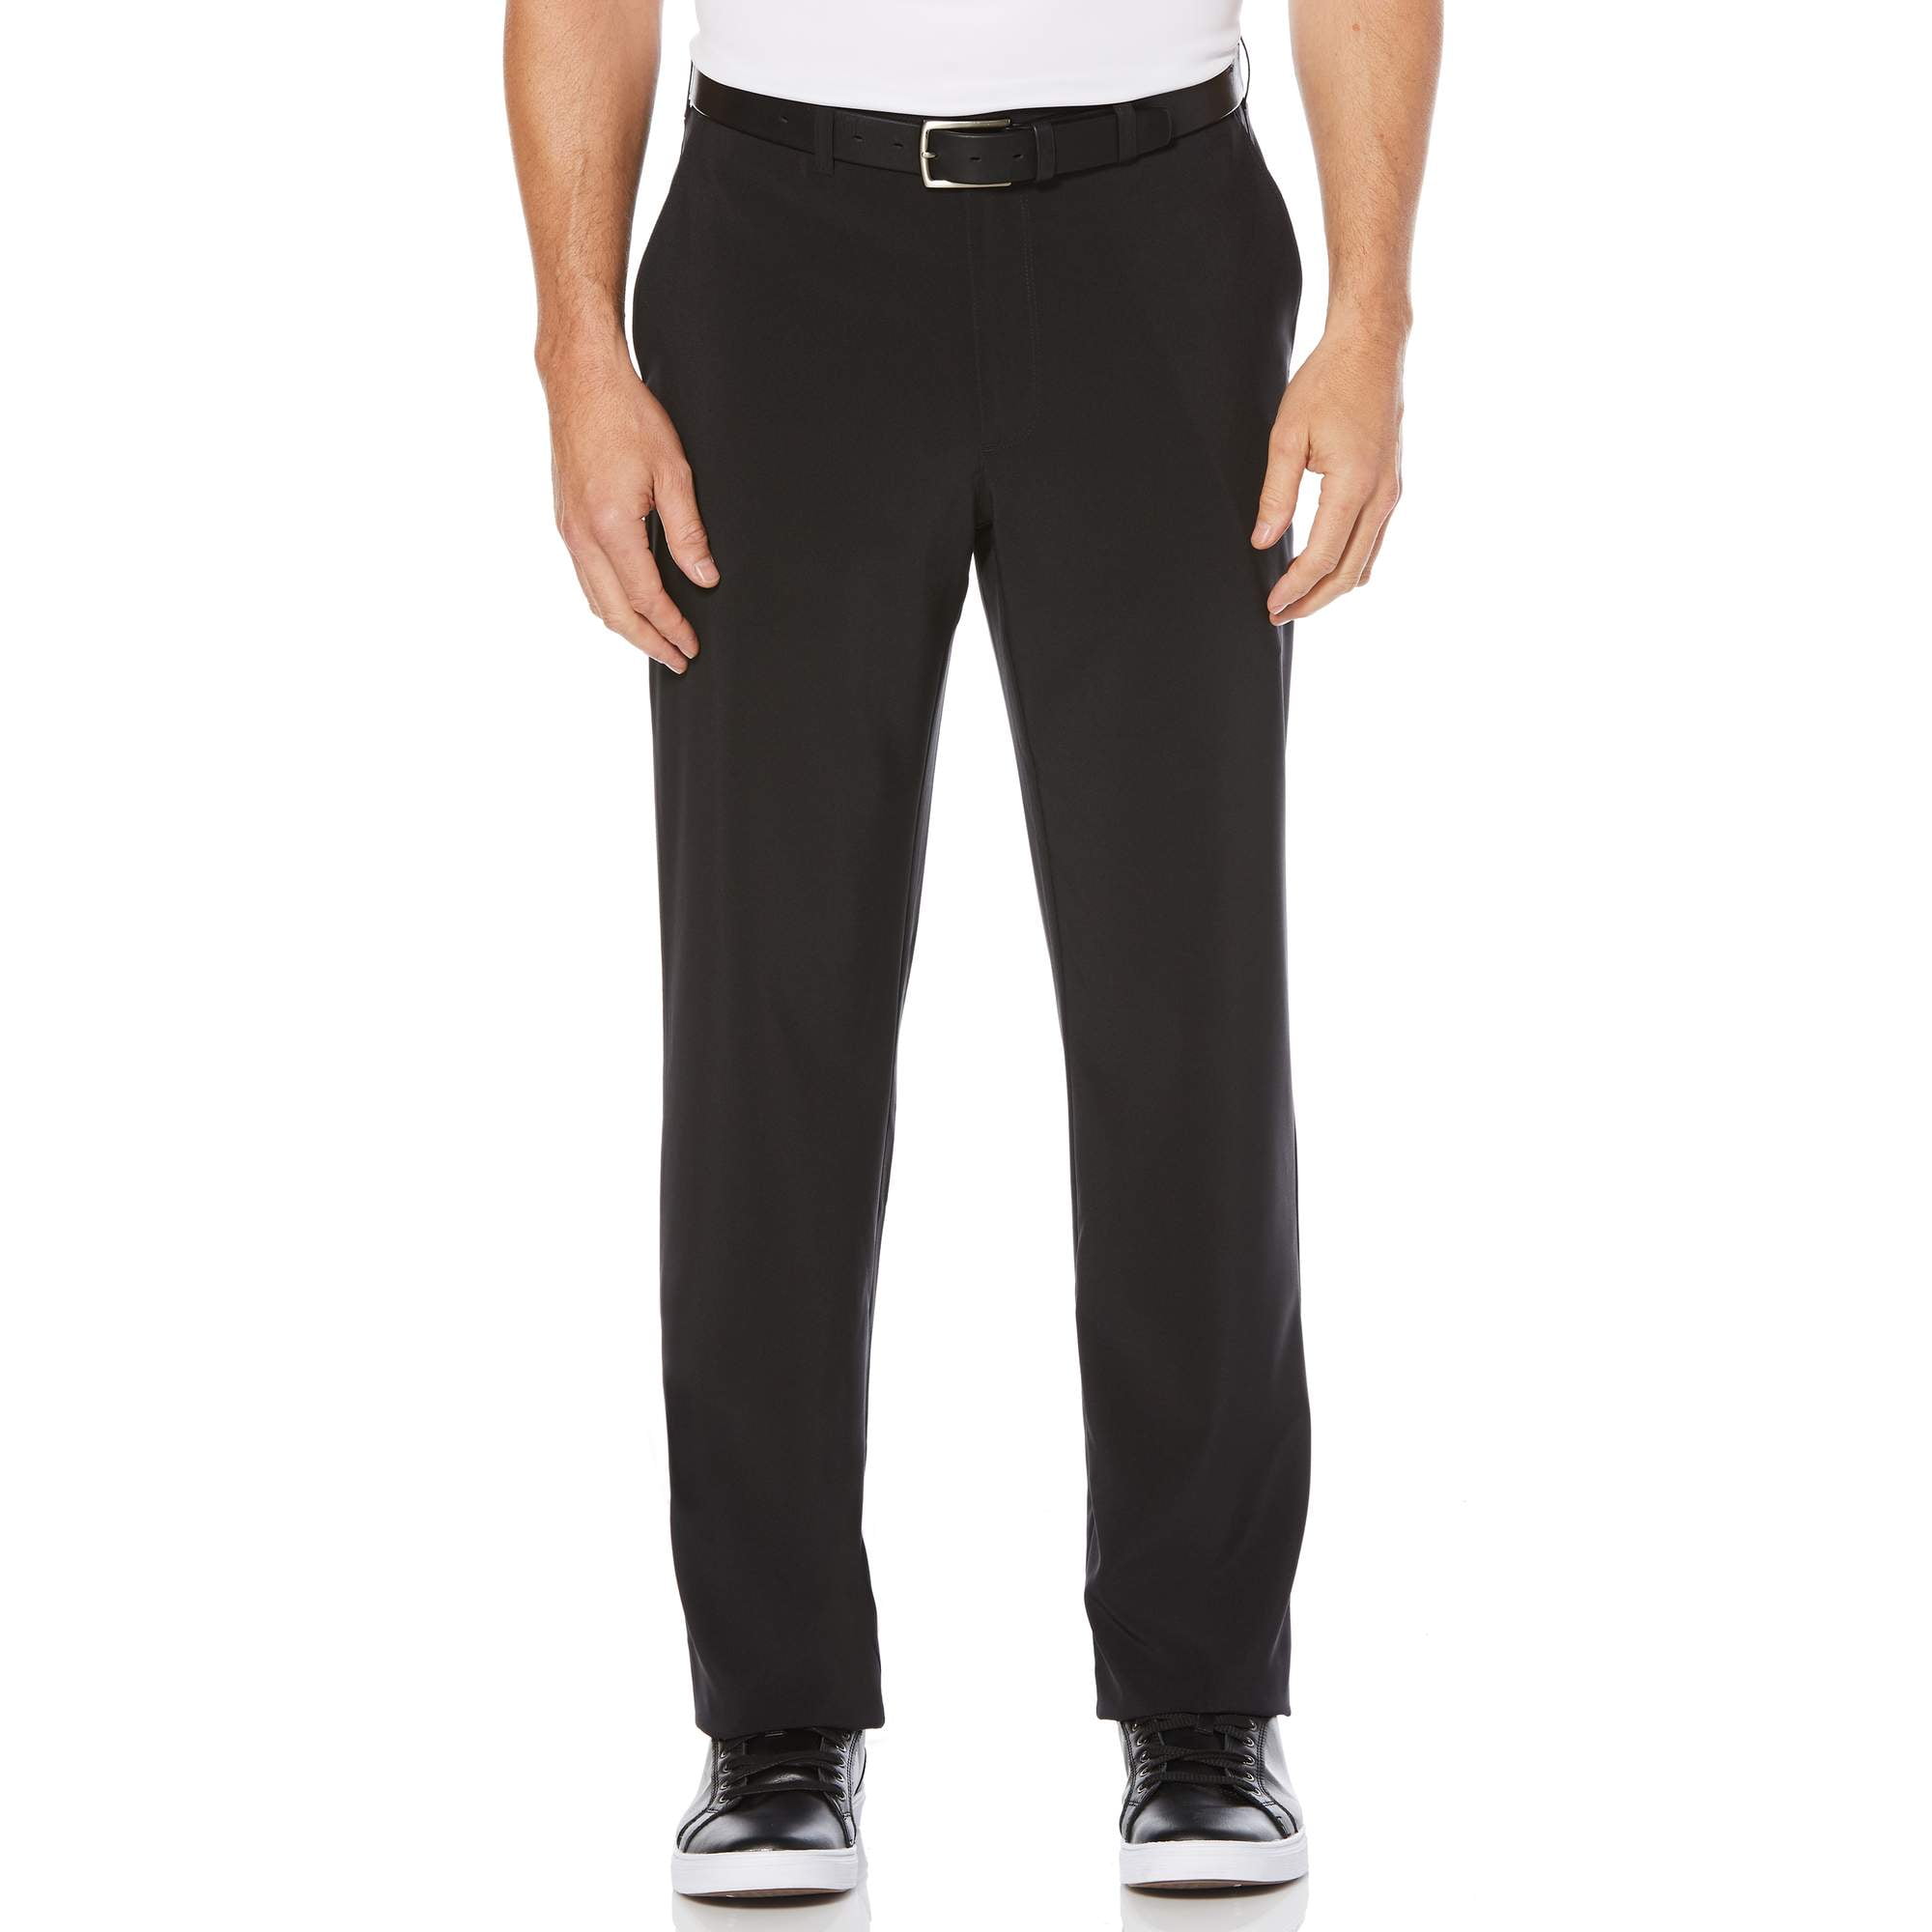 LRD Mens Slim Fit Performance Stretch Golf Pants - 30 x 28 Black